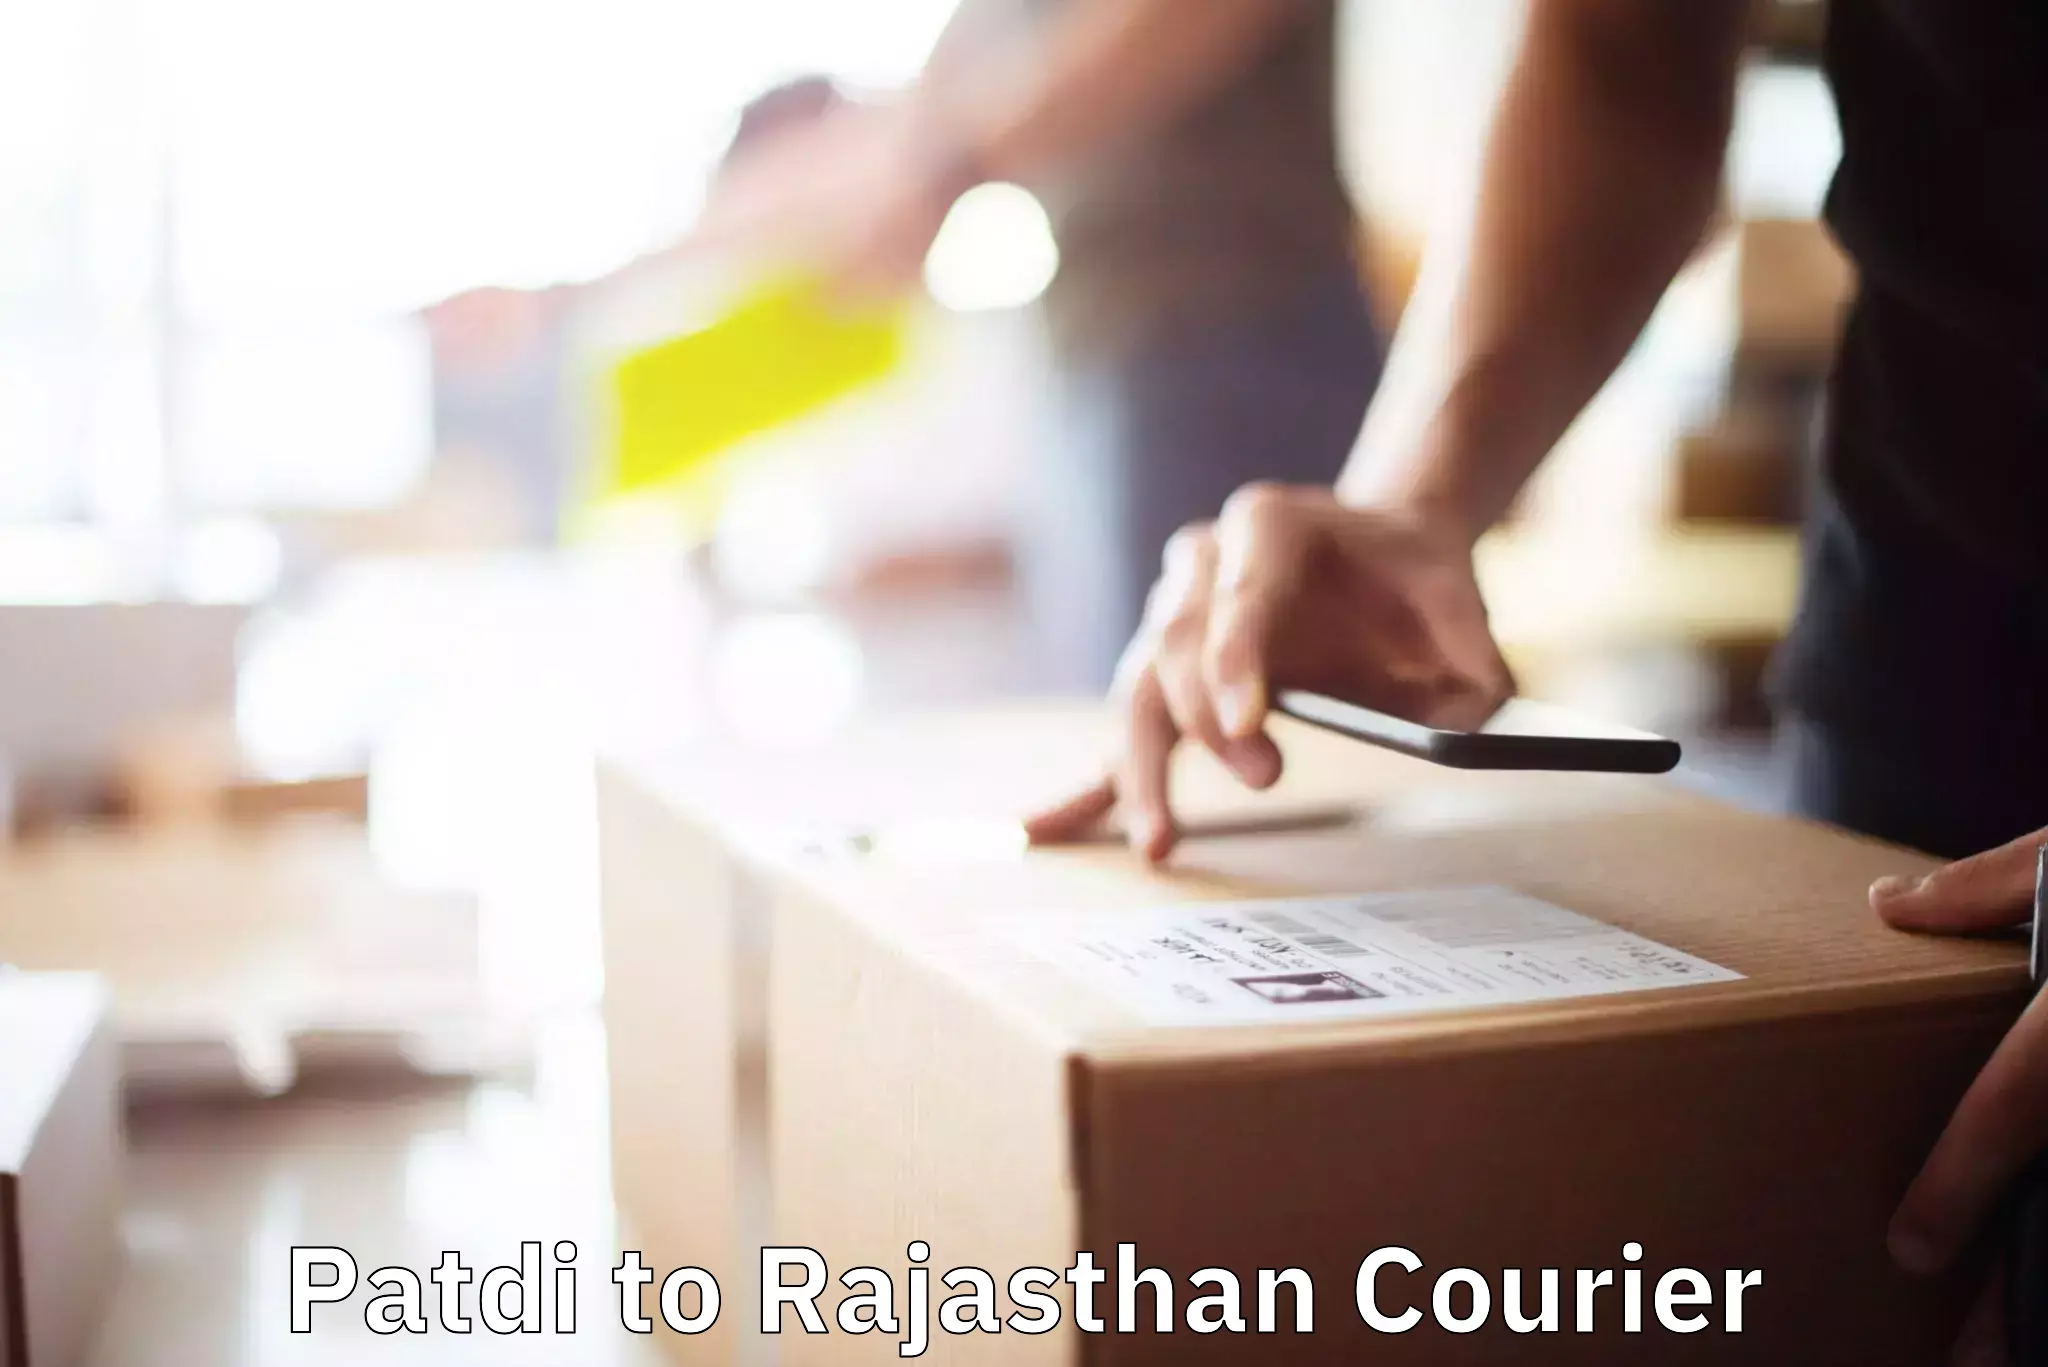 Efficient moving company Patdi to Rajasthan